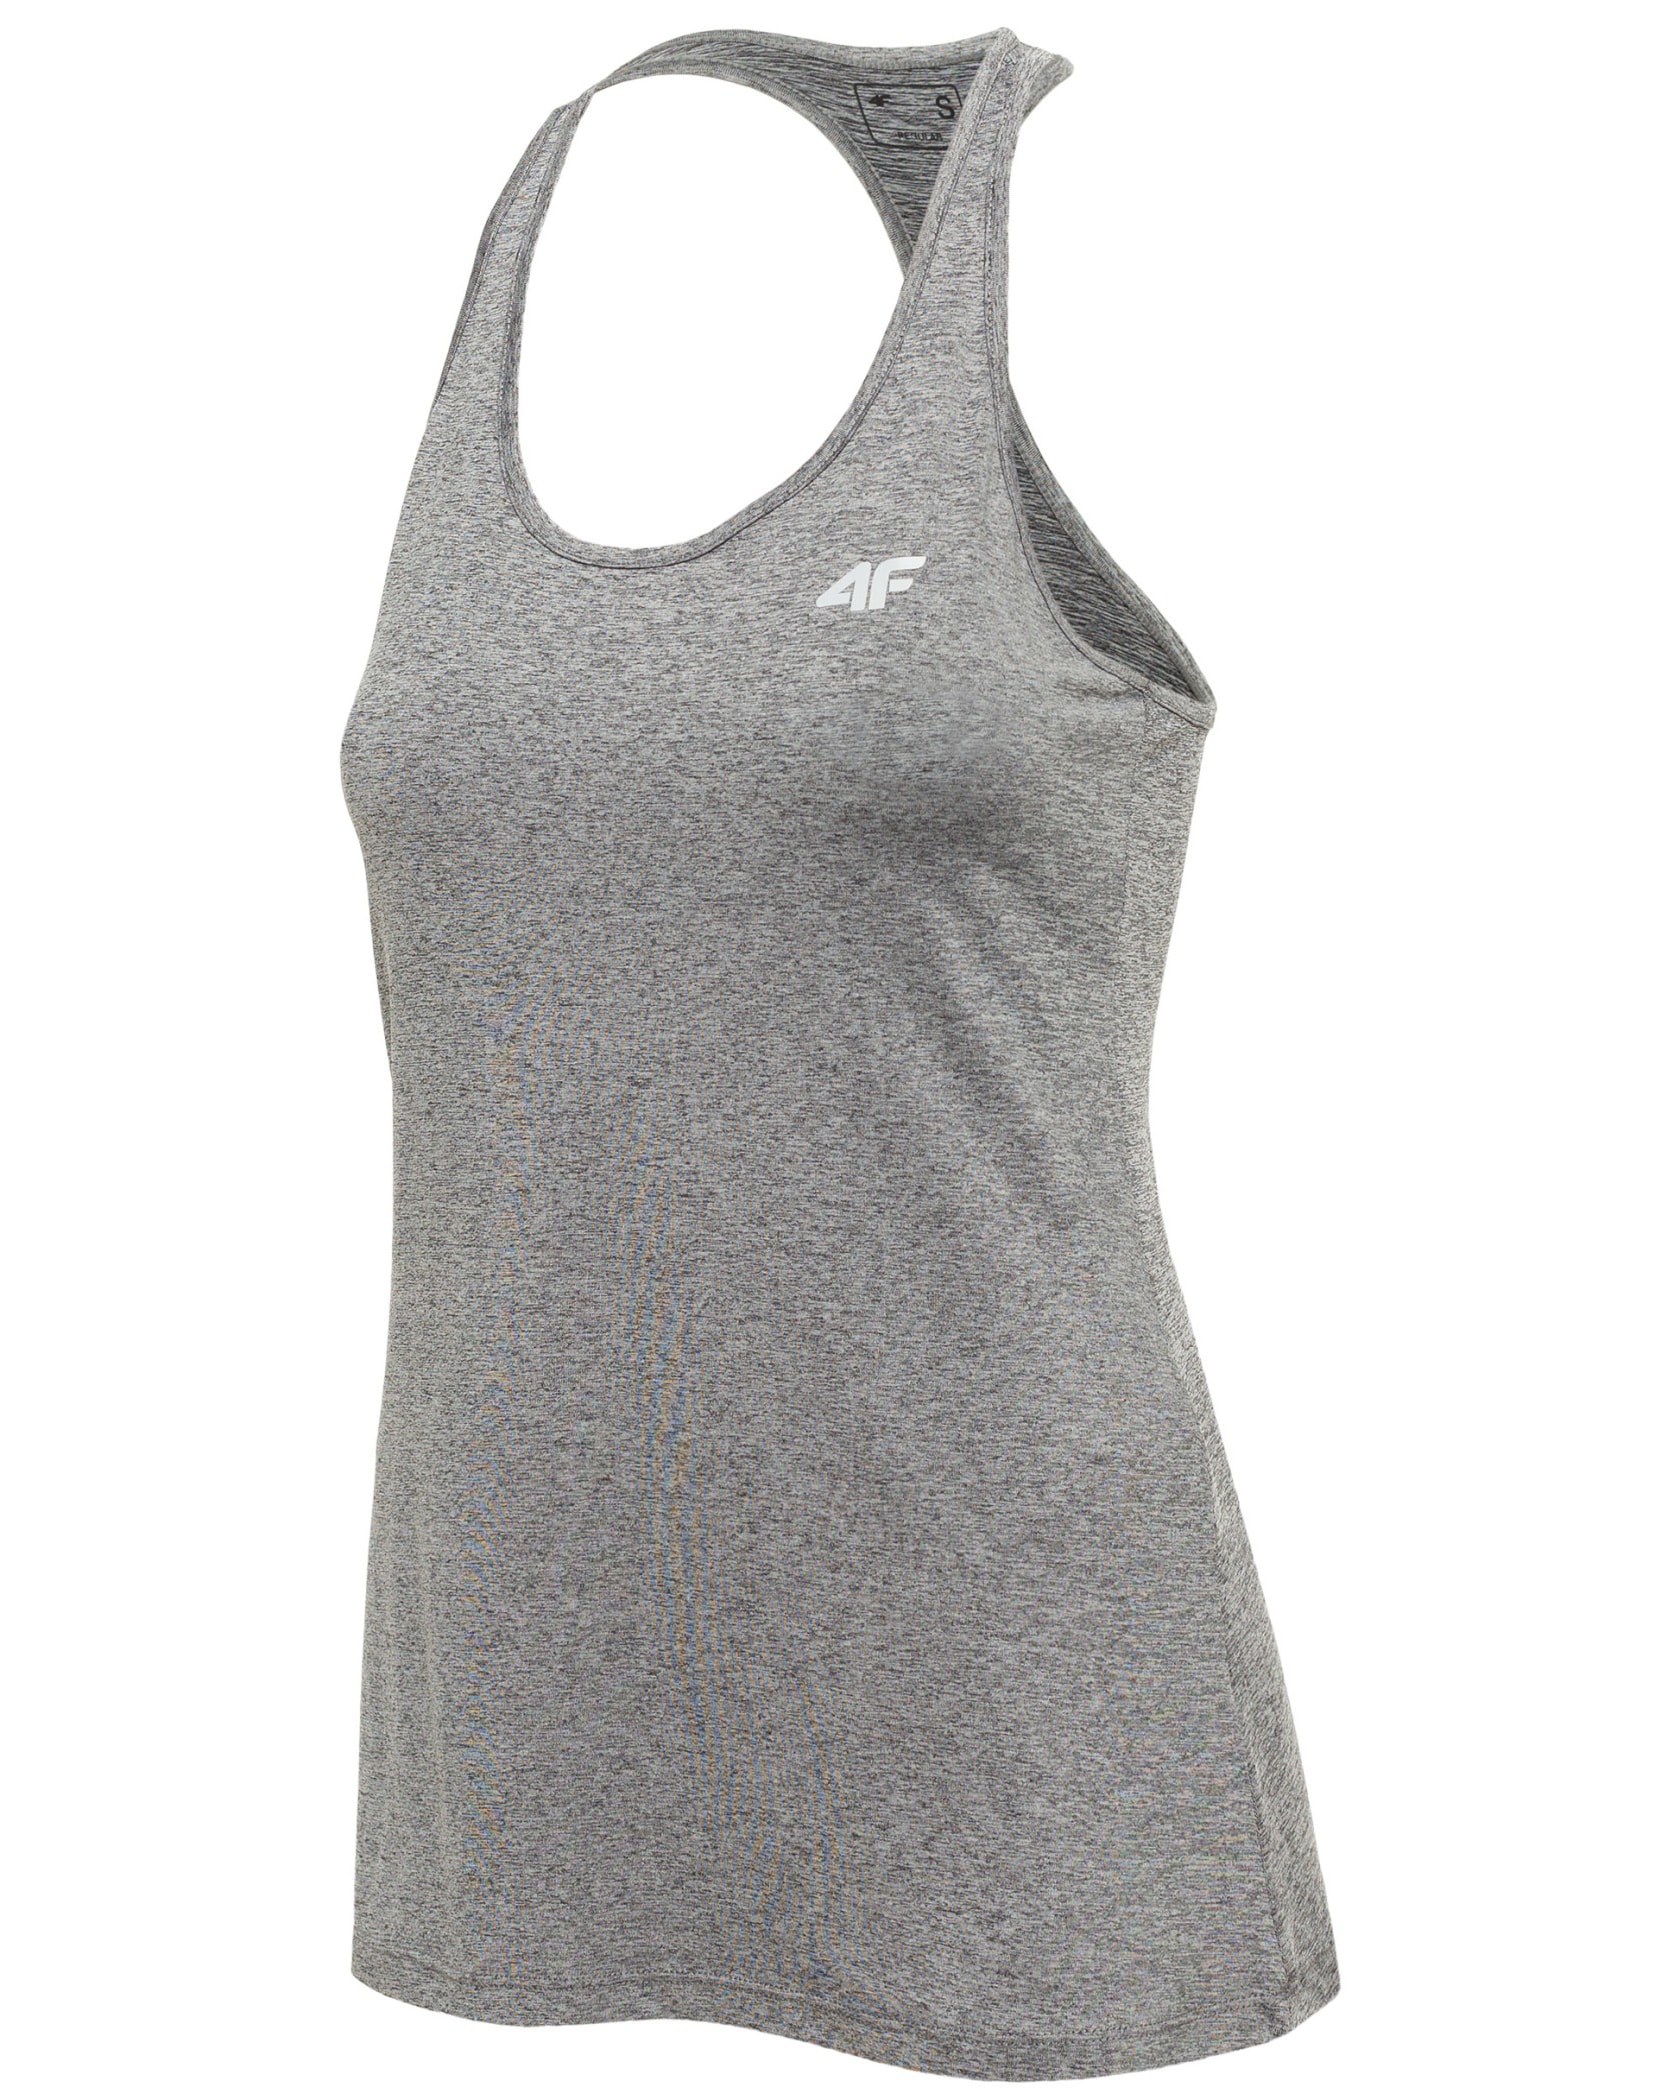 4F Women’s Functional T-Shirt - Middle Grey Melange